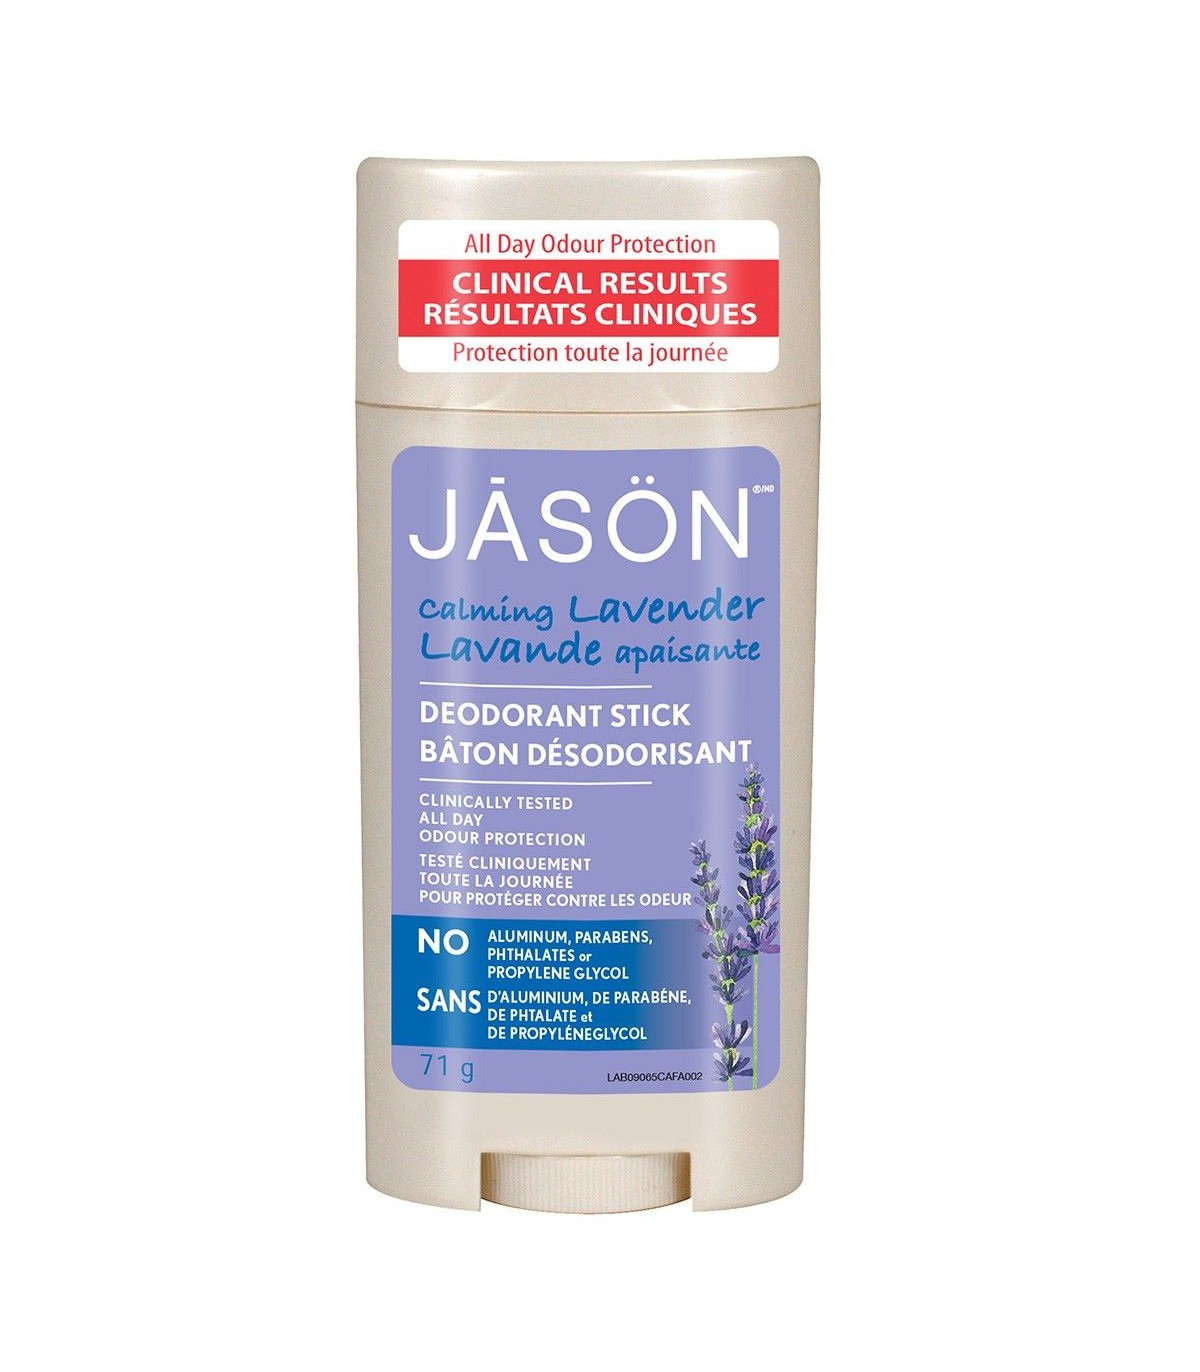 Jason Organic Lavender Deodorant